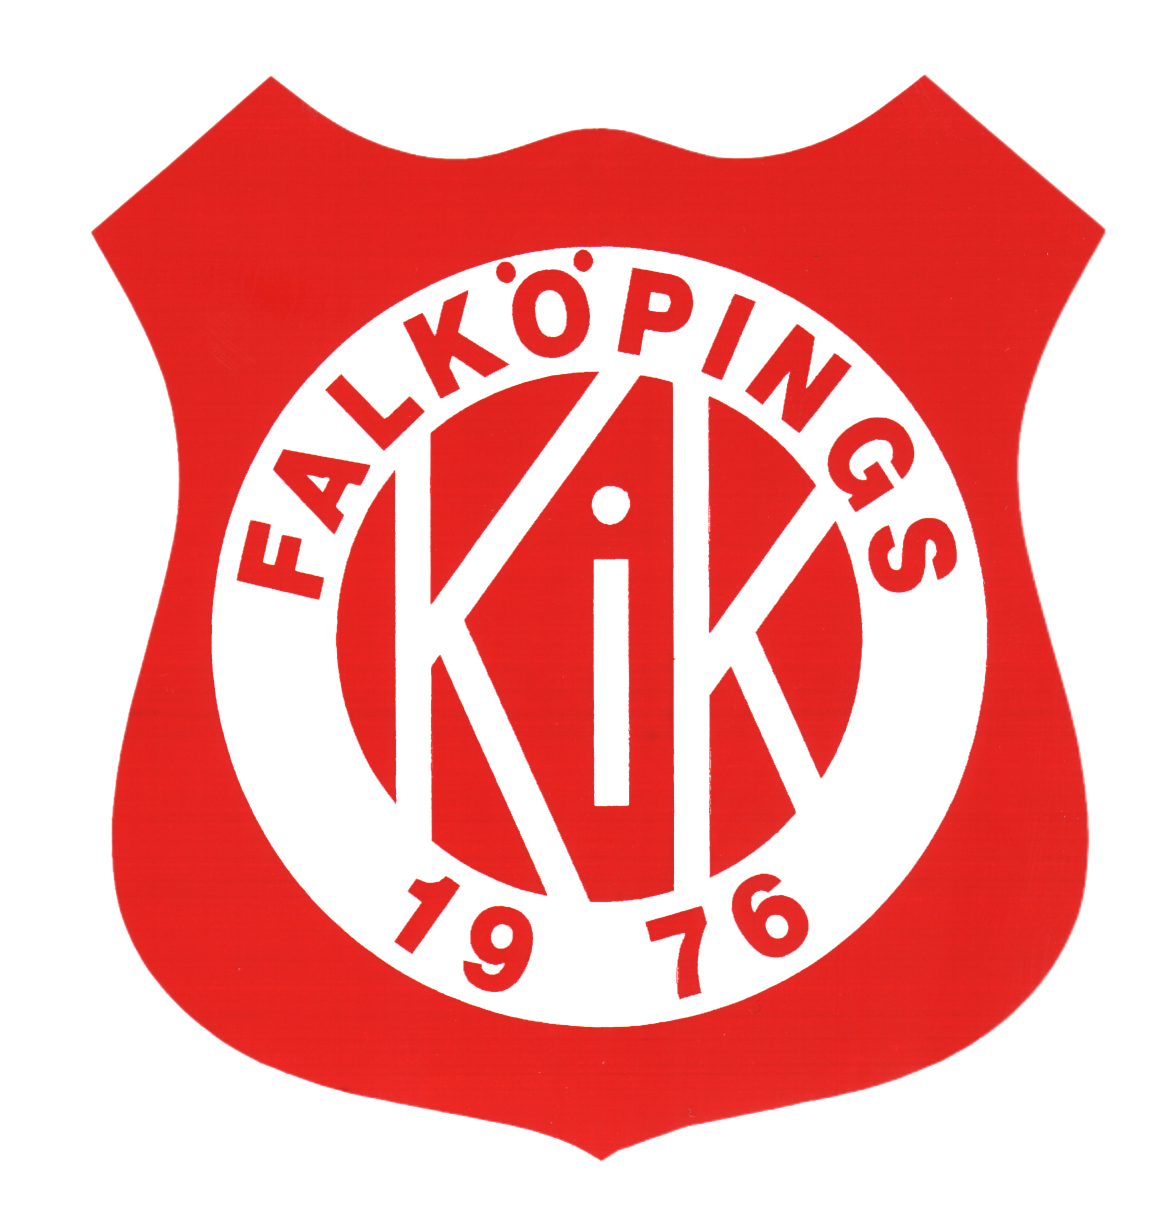 Fkik Logo 4 F2 Kopiera